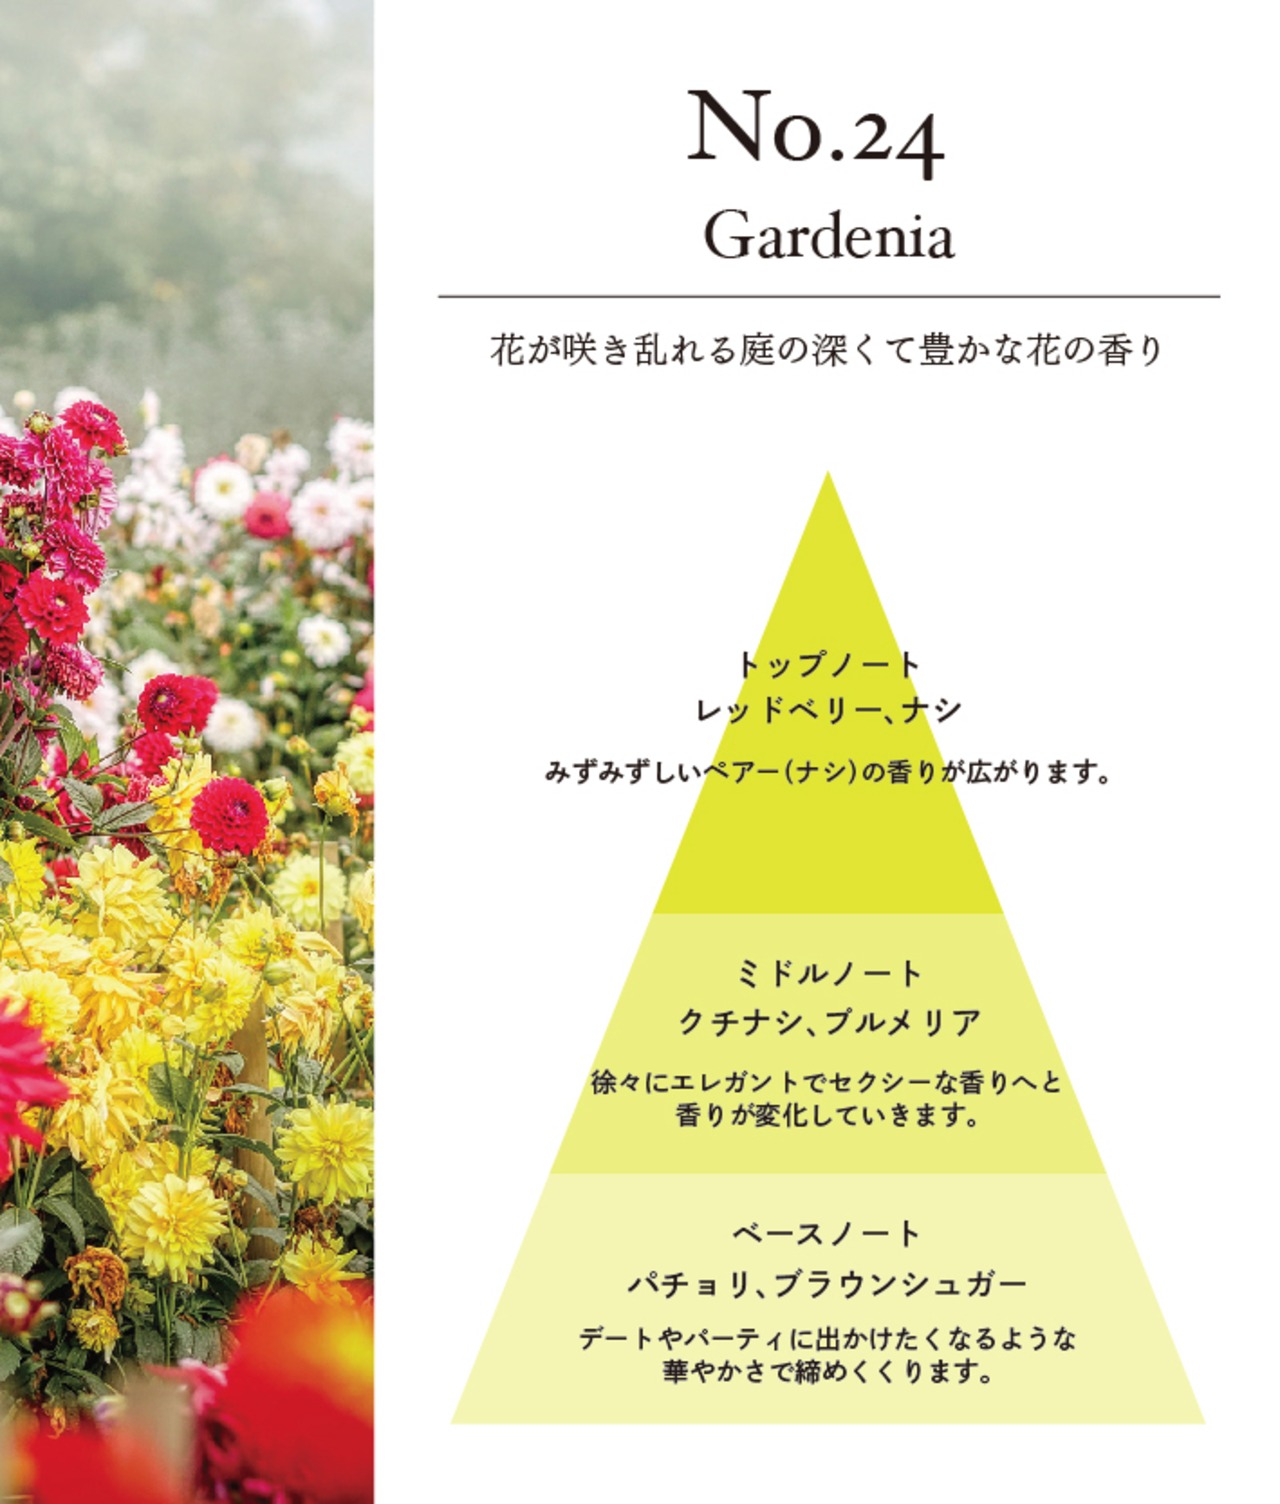 Nichic　Extrait de Parfum【No.24】Gardenia　10mL